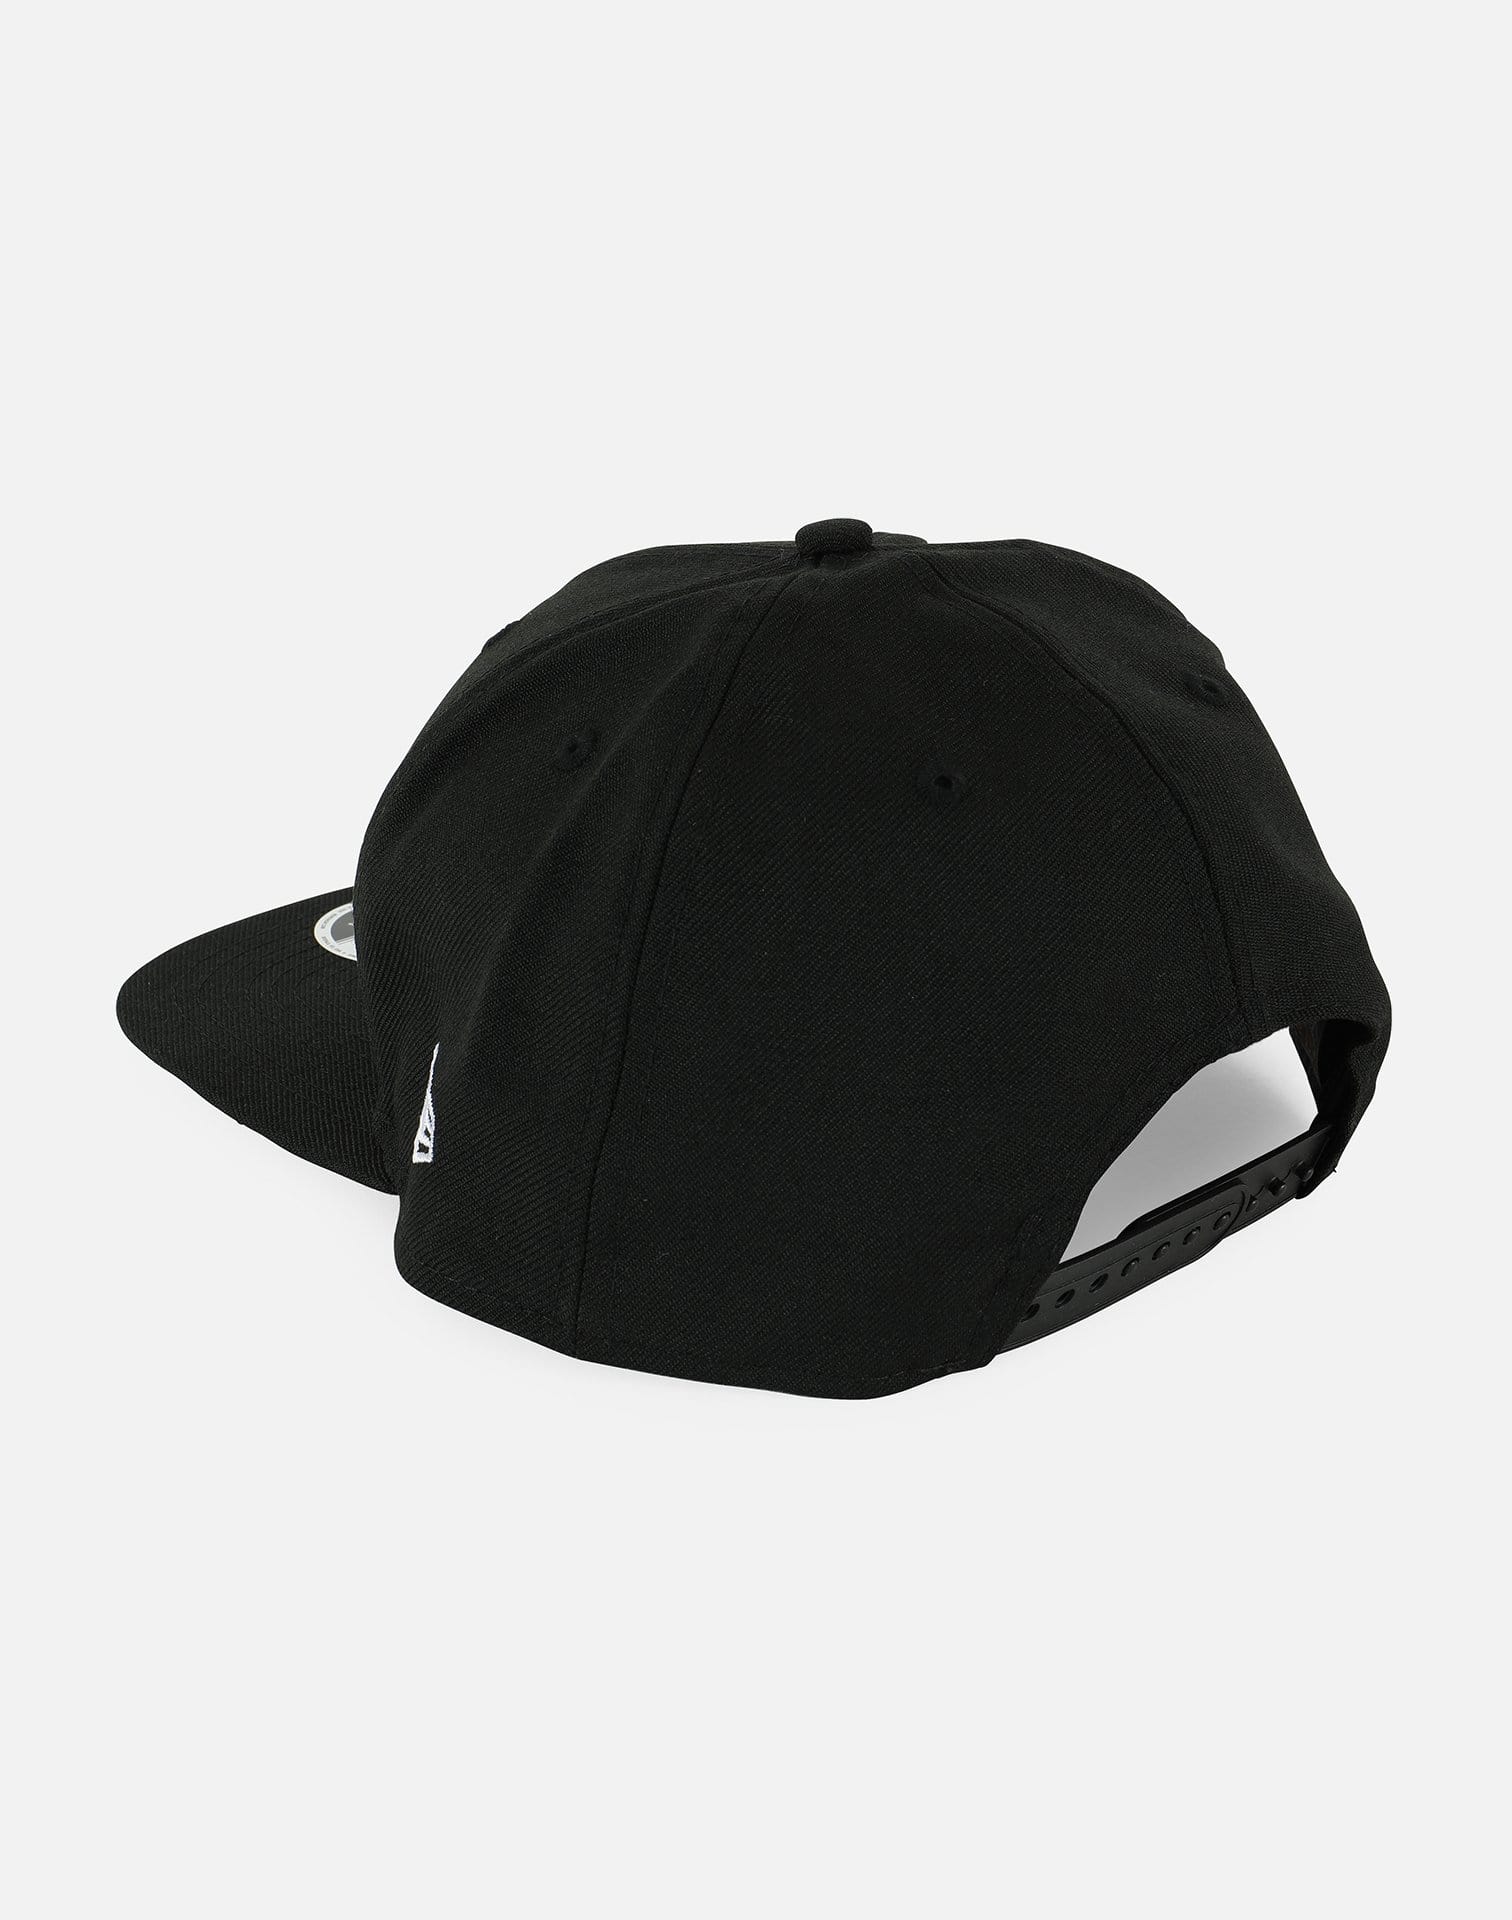 New Era Exclusive Customs S.W.A.T.S. Snapback Hat